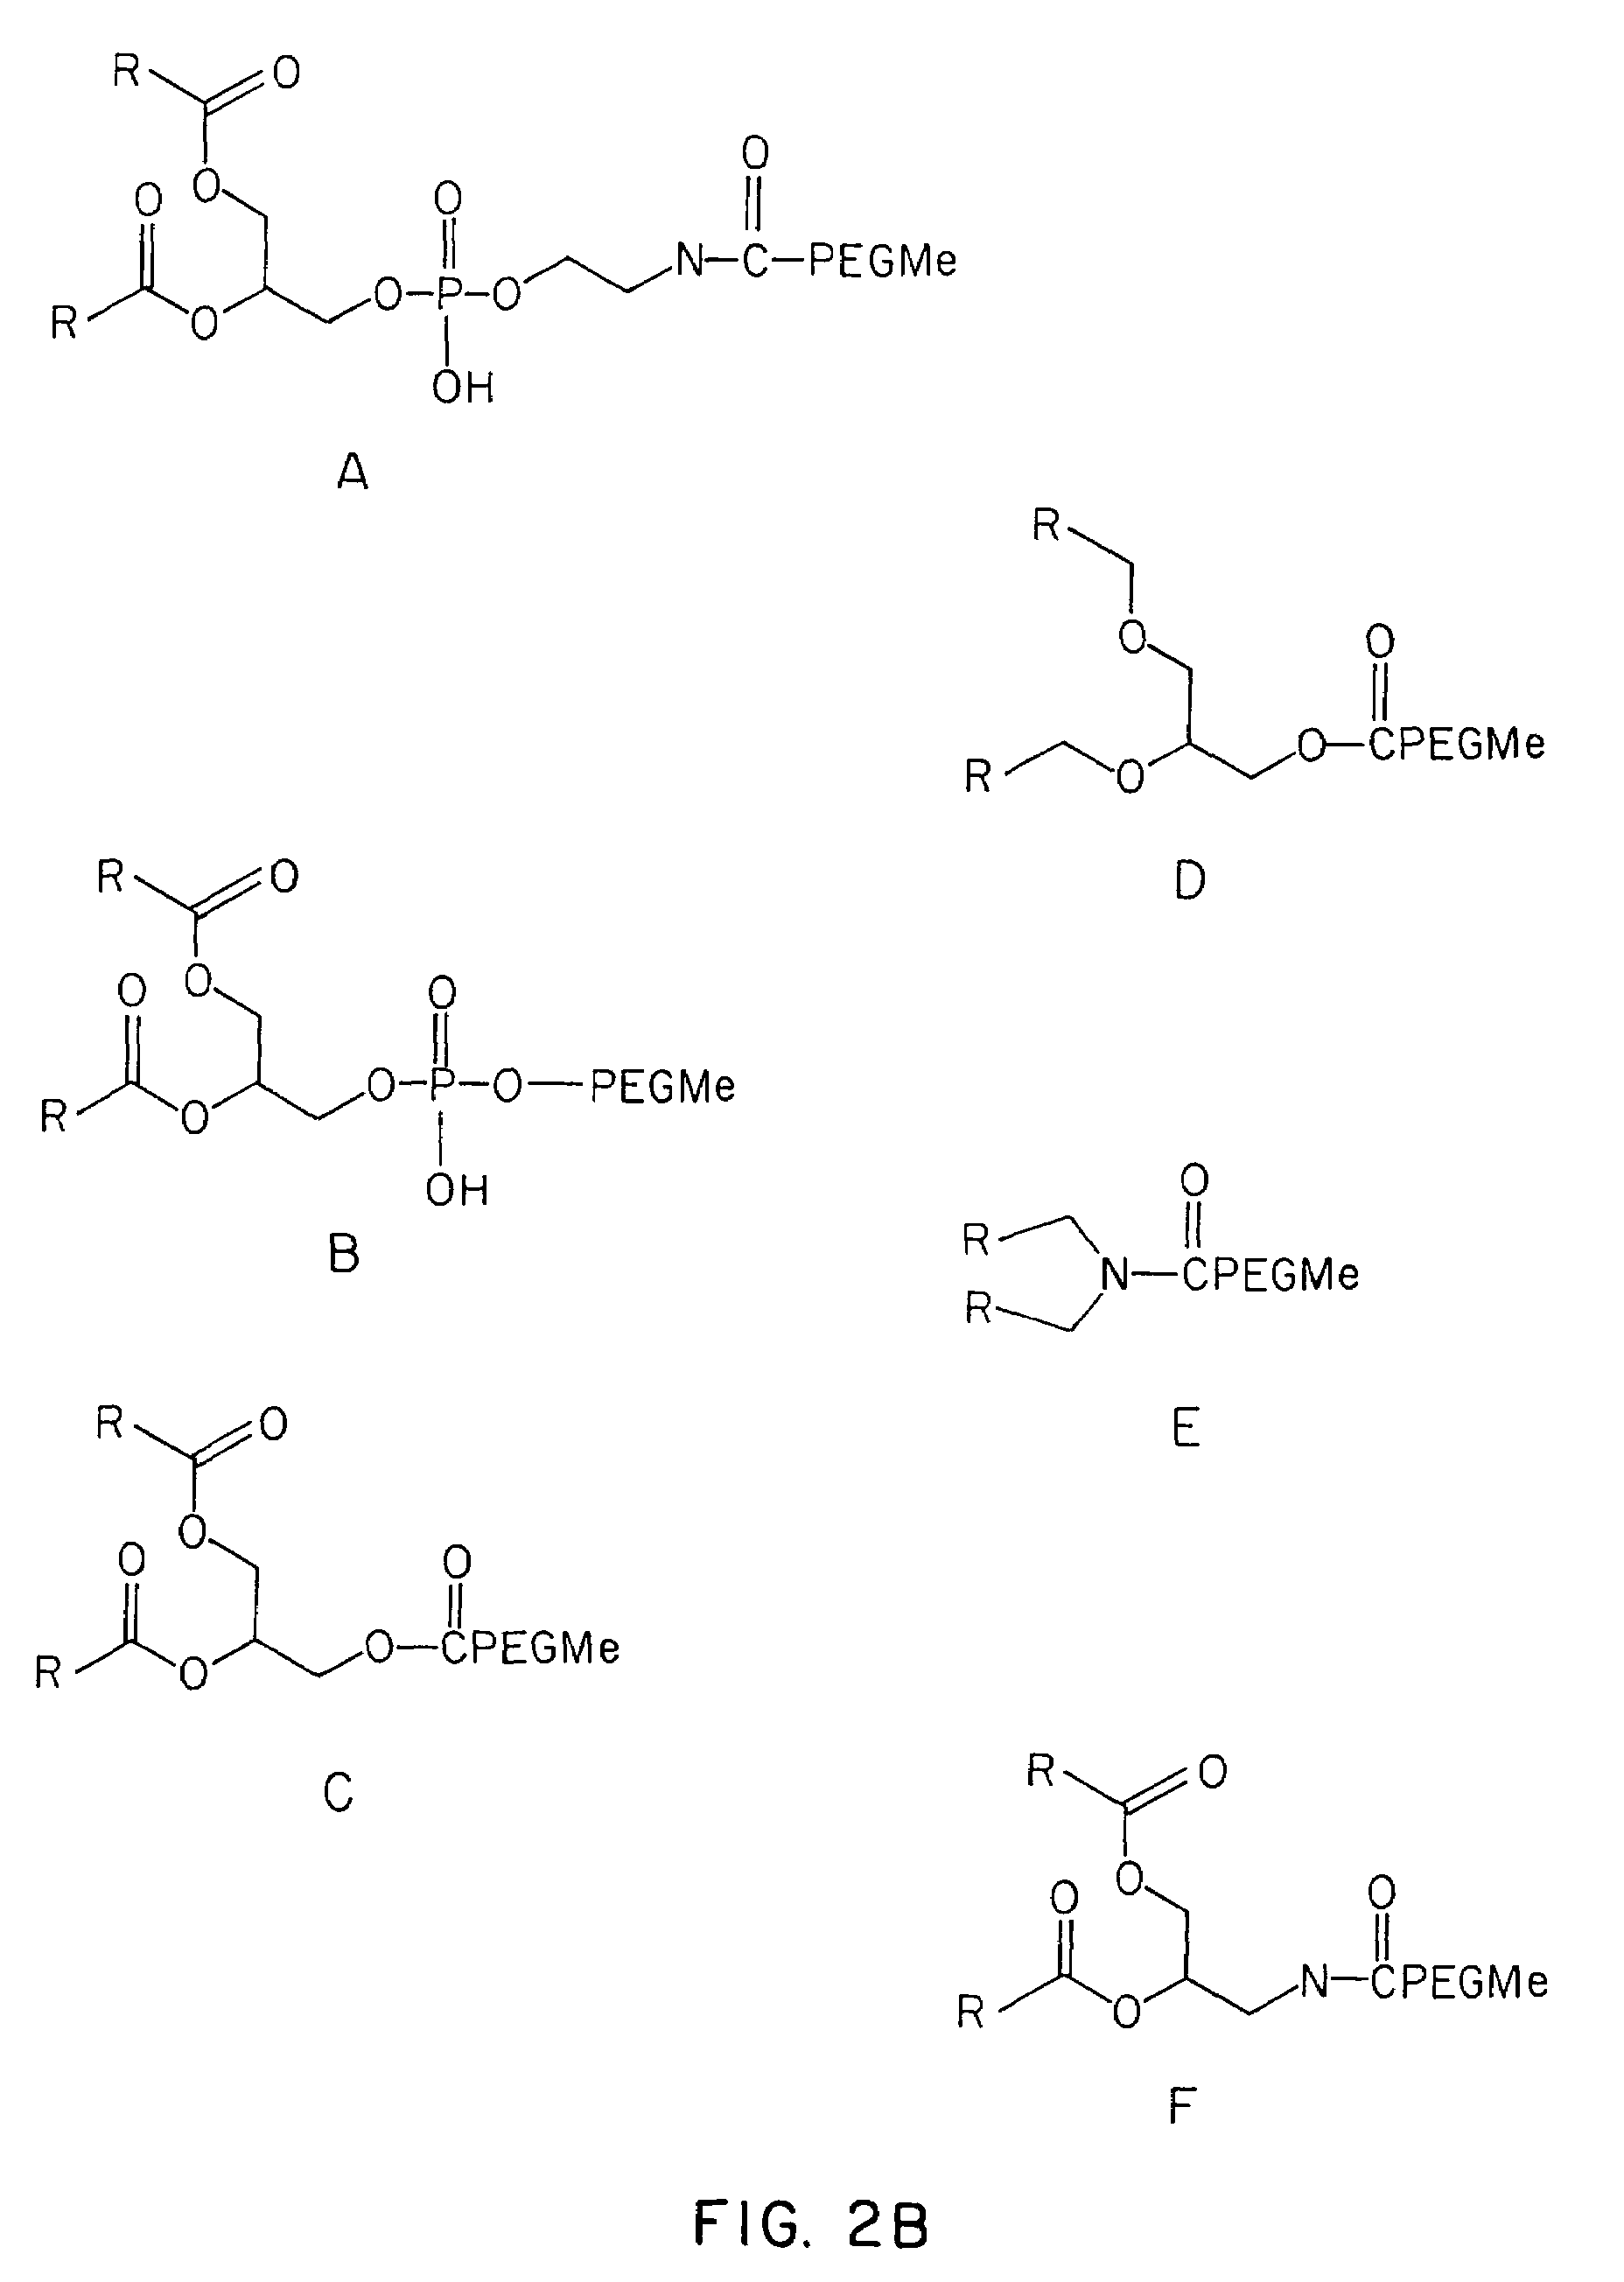 Lipid-encapsulated polyanionic nucleic acid